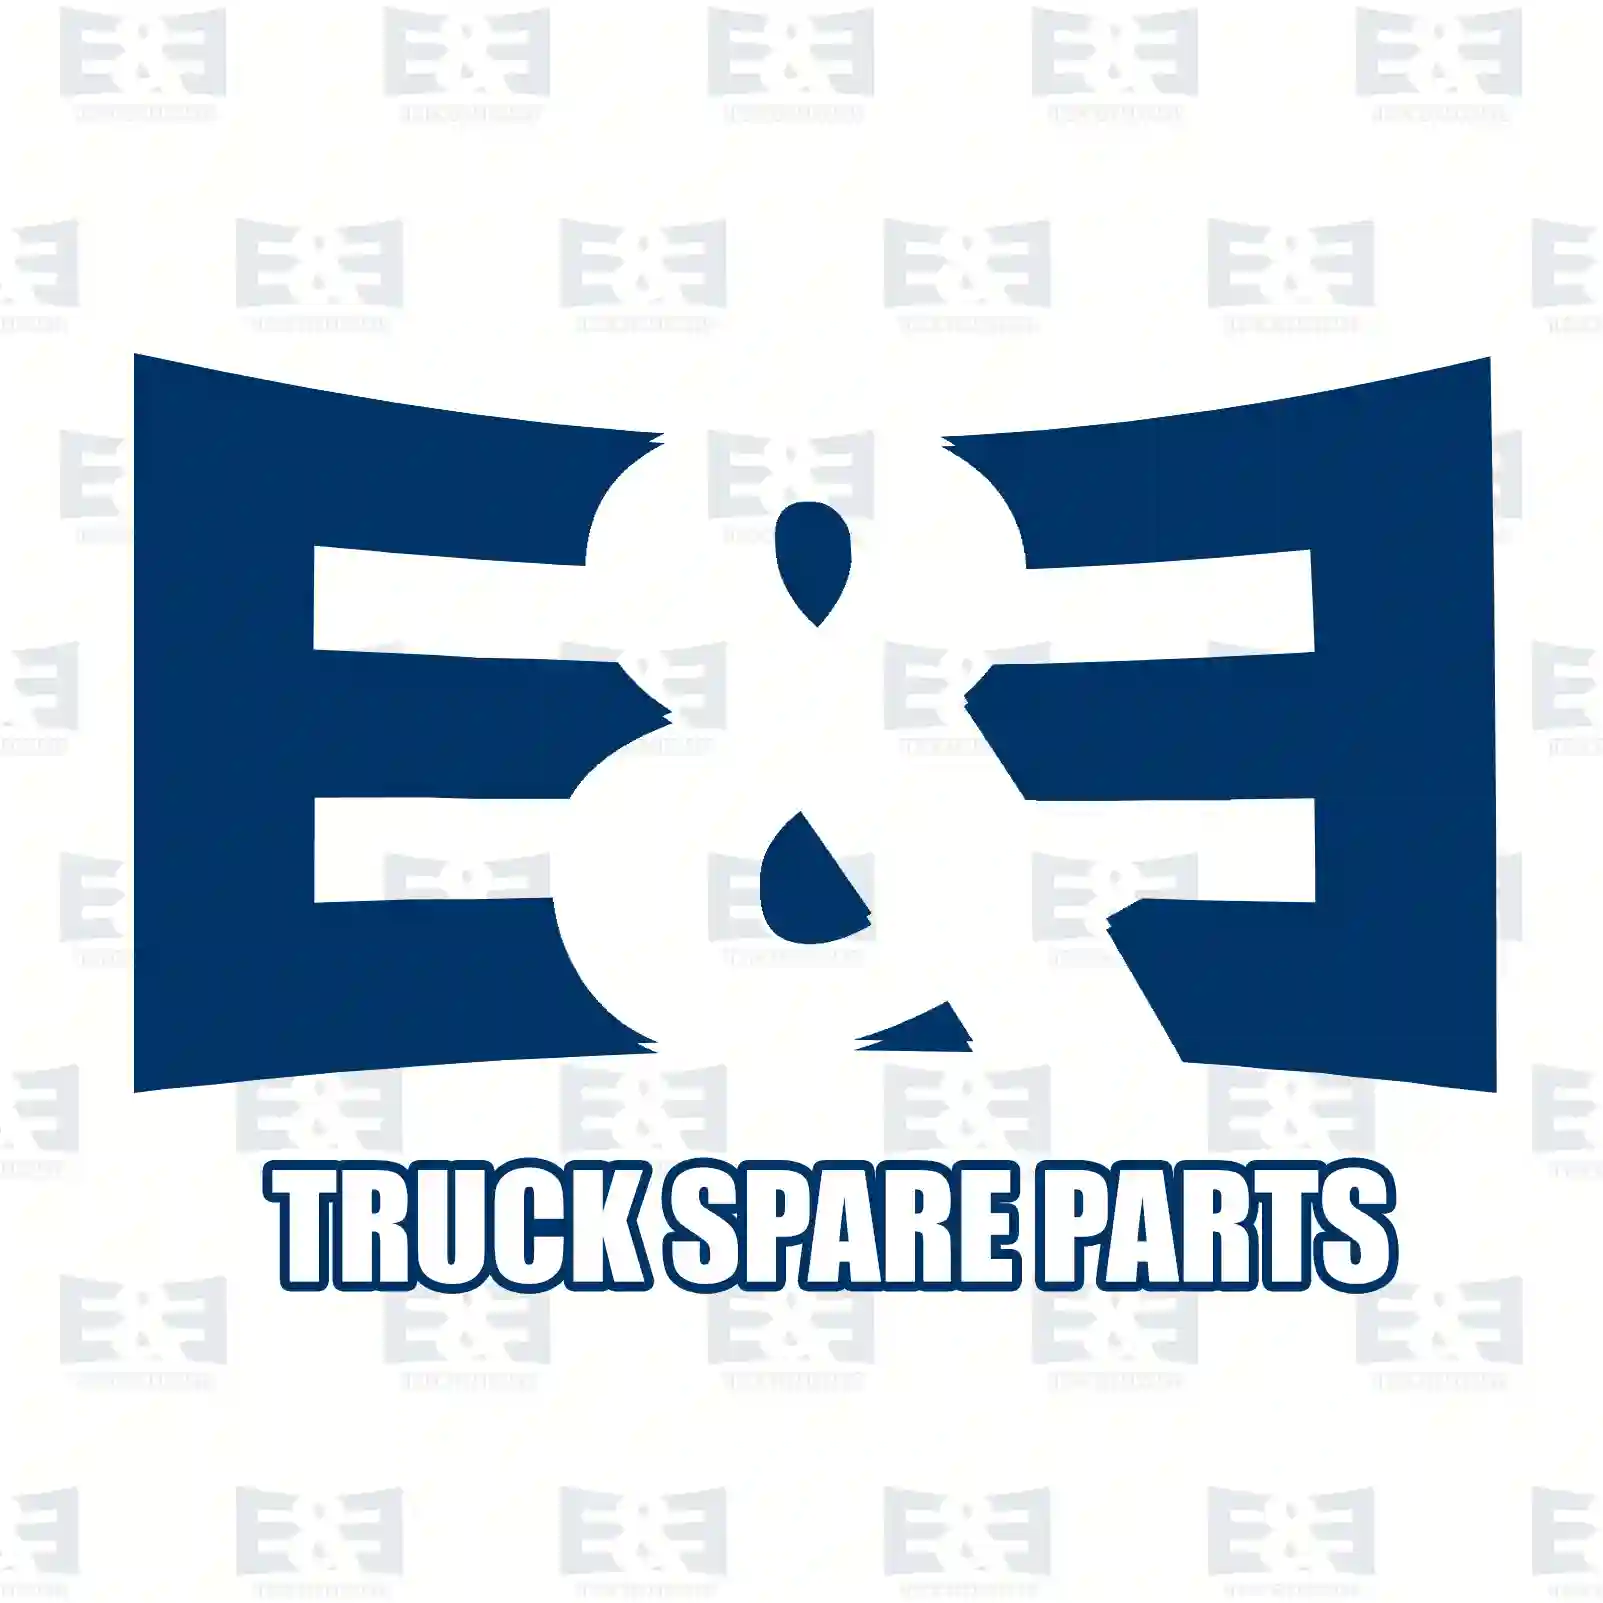 Drum brake lining kit, axle kit, 2E2296235, 0070707, 0070708, 0682416, 0682418, 0682857, 0683033, 0683274, 0683274S, 1808124, 682416, 682418, 682857, 683033, 683274, 683274S, 70707, 70708 ||  2E2296235 E&E Truck Spare Parts | Truck Spare Parts, Auotomotive Spare Parts Drum brake lining kit, axle kit, 2E2296235, 0070707, 0070708, 0682416, 0682418, 0682857, 0683033, 0683274, 0683274S, 1808124, 682416, 682418, 682857, 683033, 683274, 683274S, 70707, 70708 ||  2E2296235 E&E Truck Spare Parts | Truck Spare Parts, Auotomotive Spare Parts